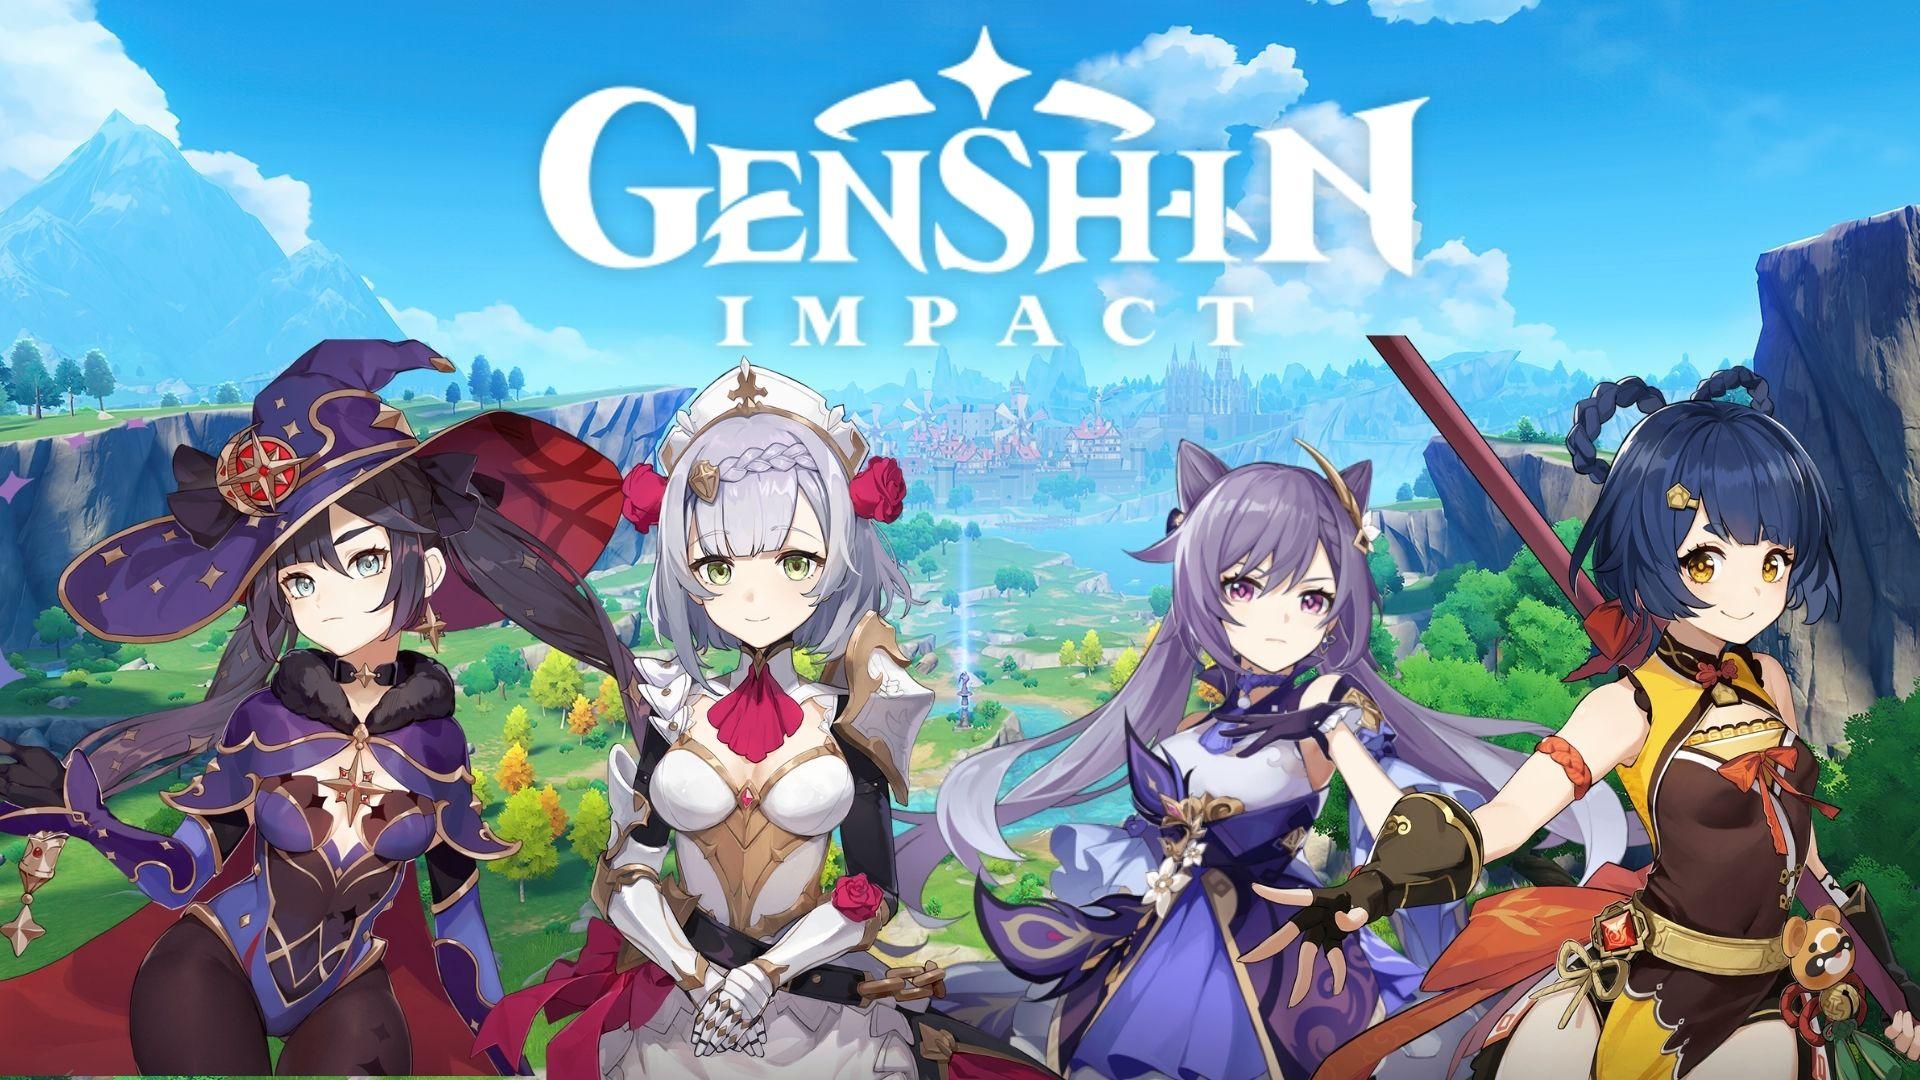 Genshin Impact characters next to the logo